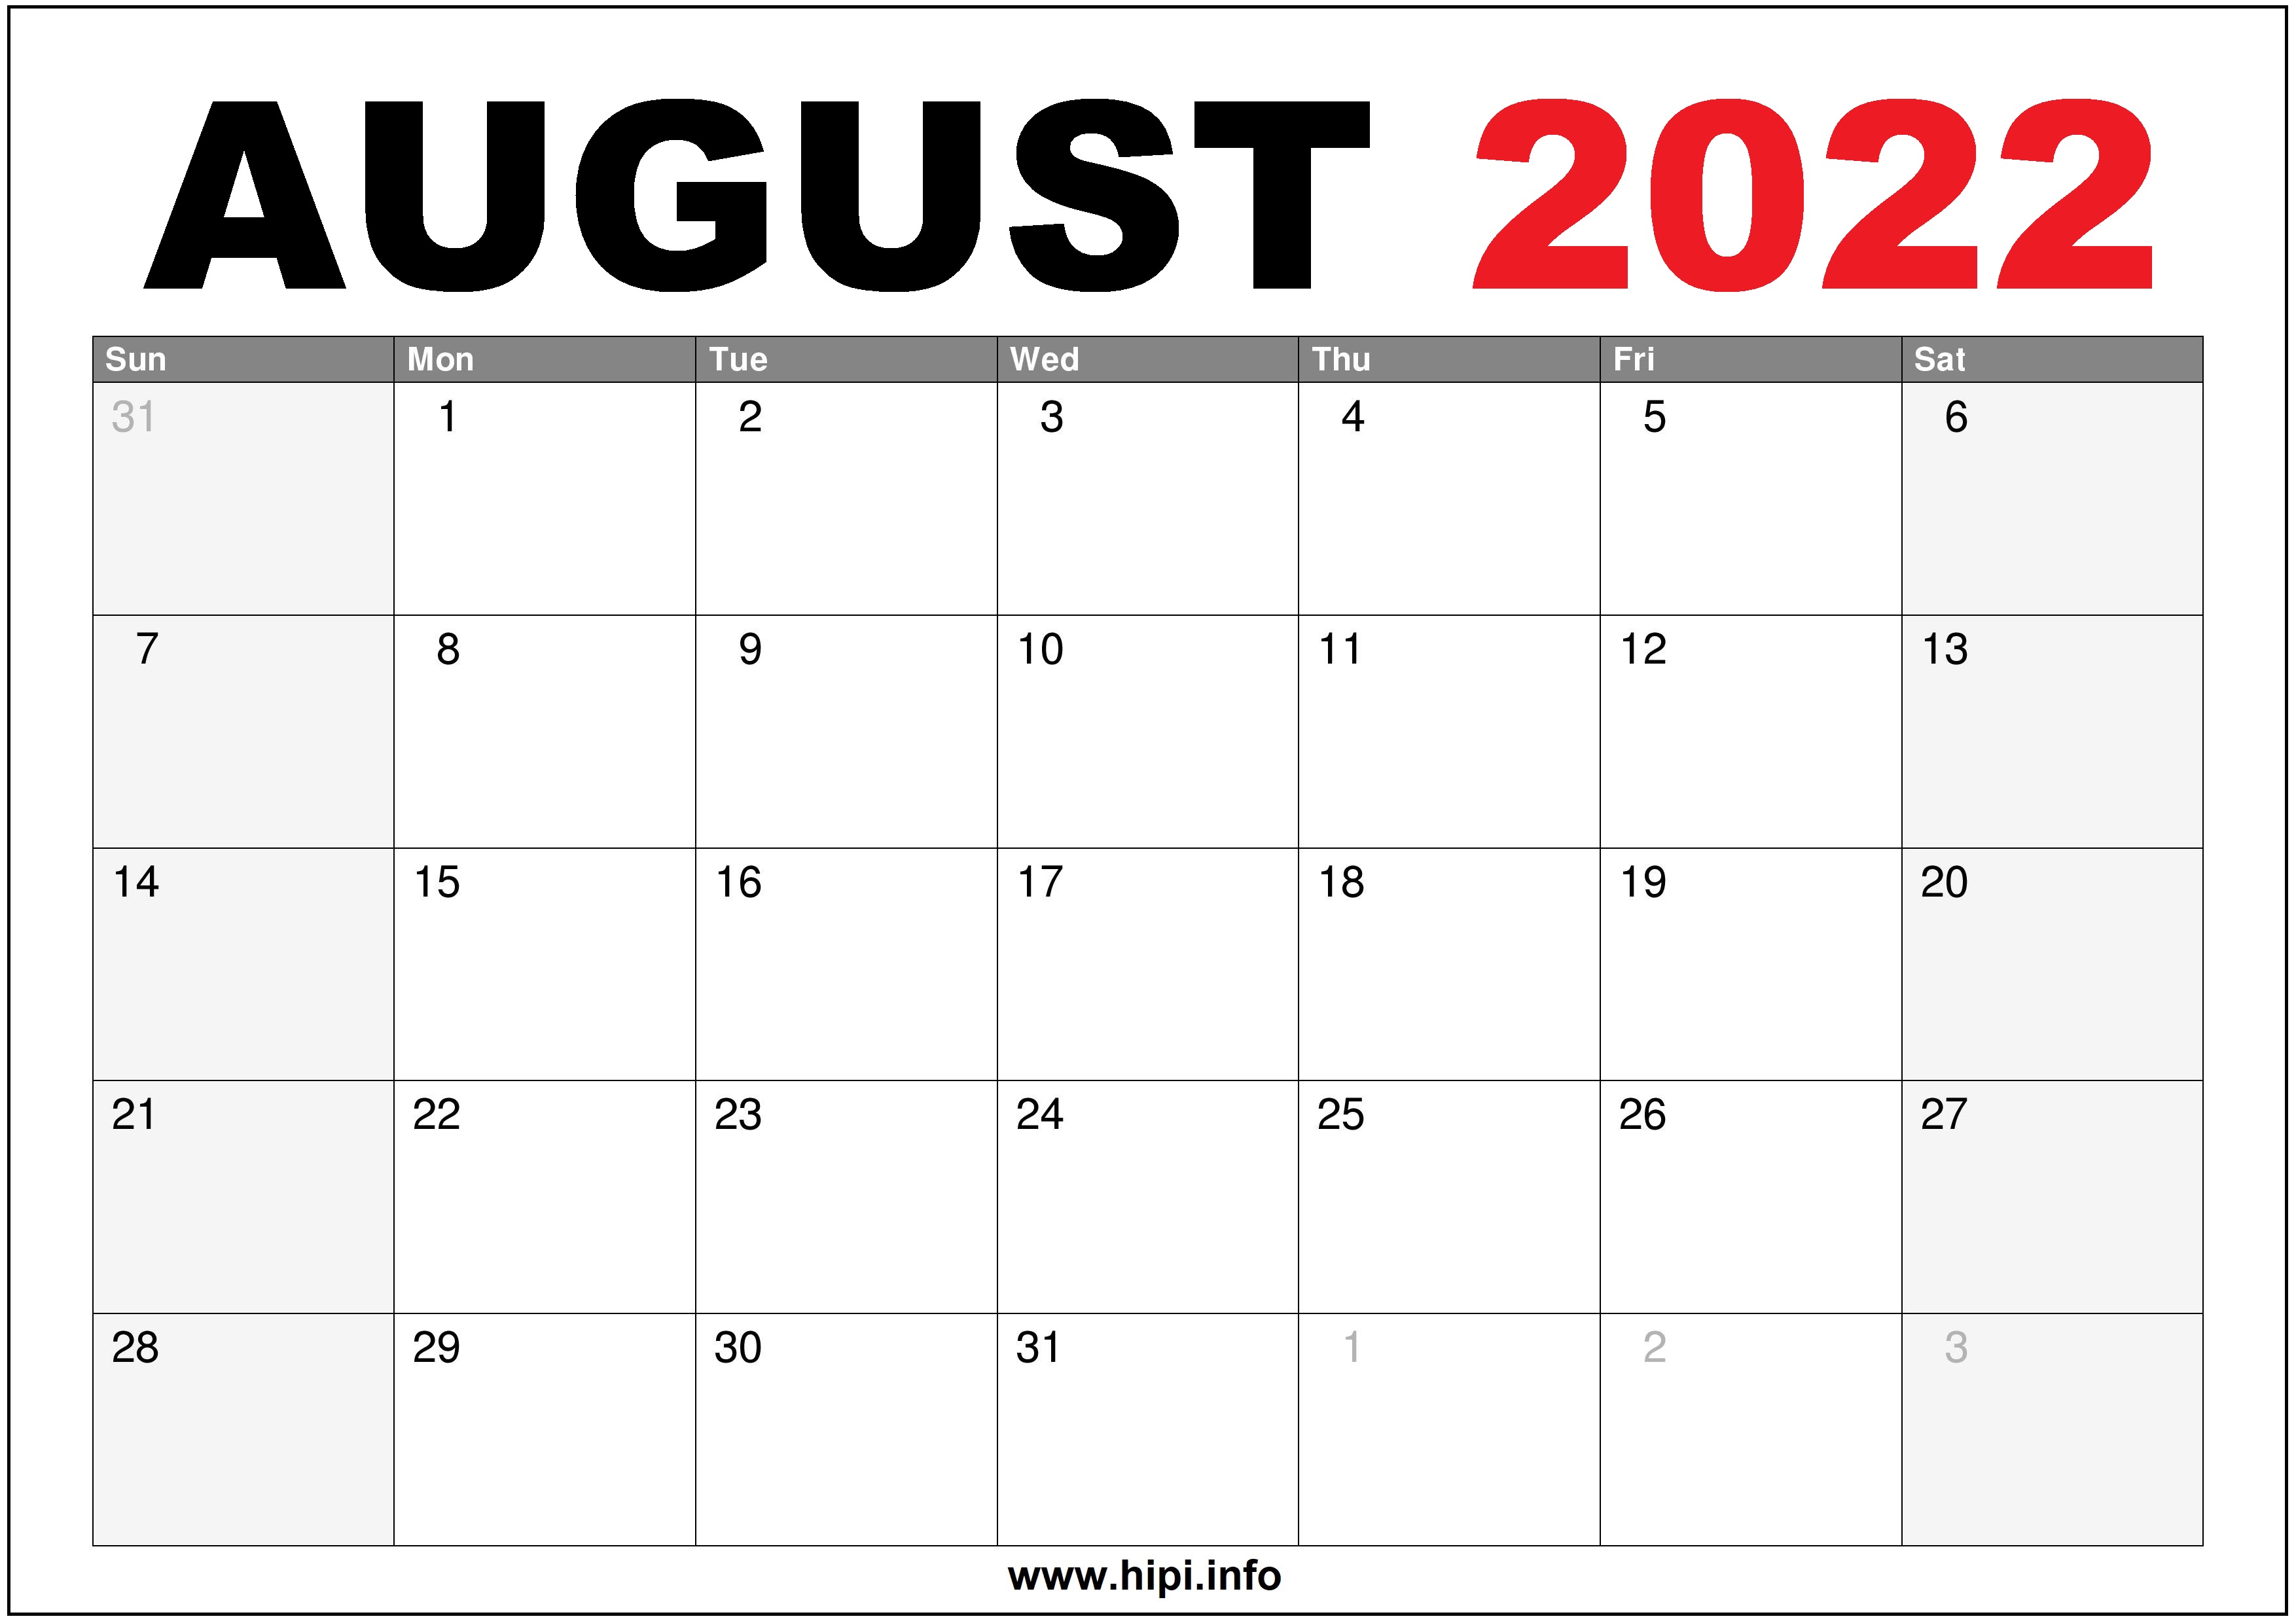 Printable August 2022 Calendar Us August 2022 Calendar Printable - Hipi.info | Calendars Printable Free